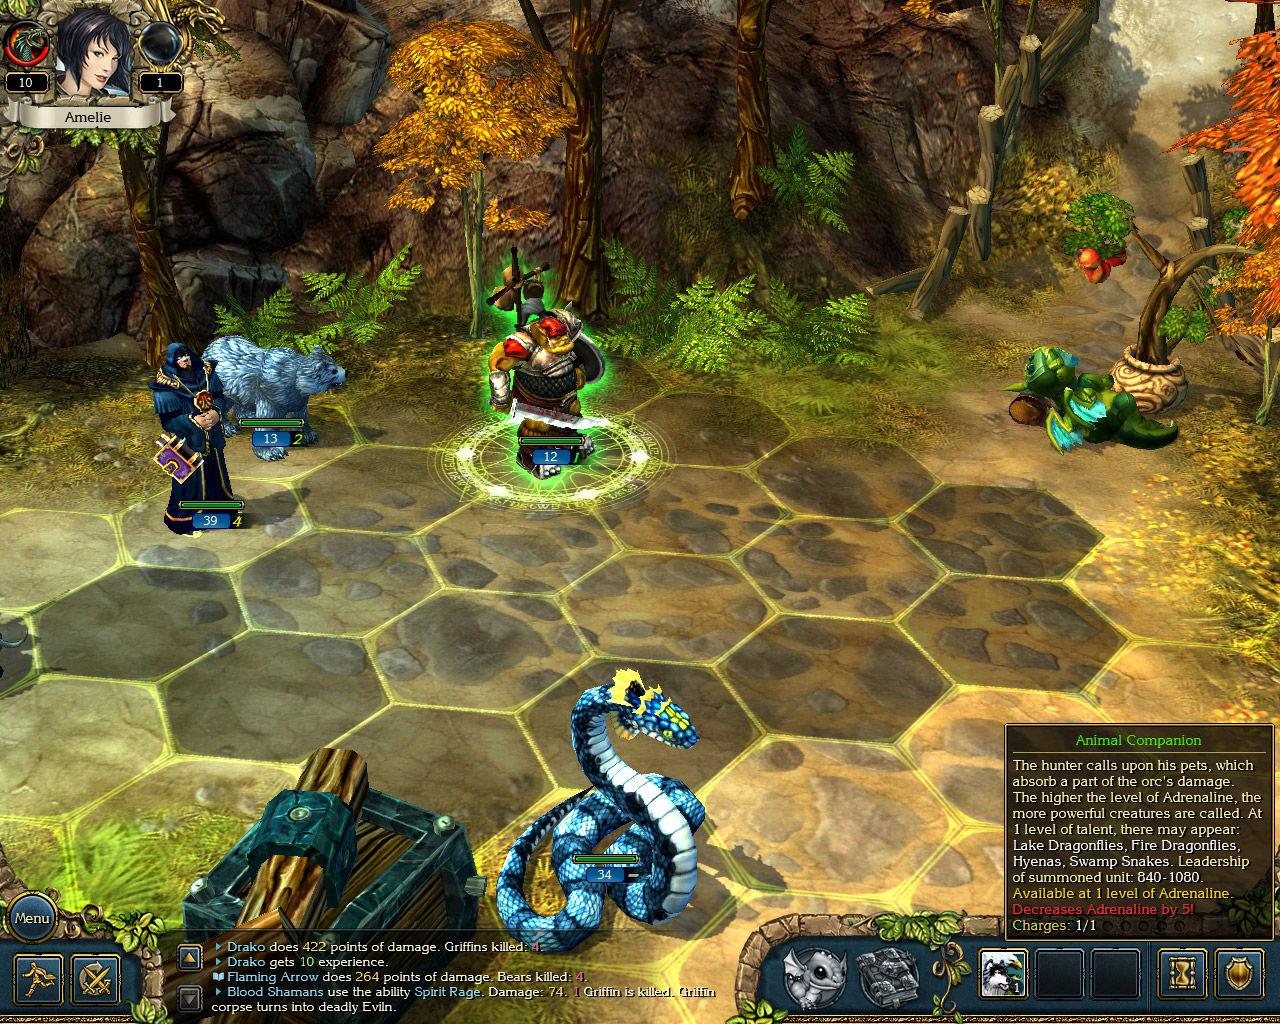 Screenshot №5 from game King's Bounty: Crossworlds